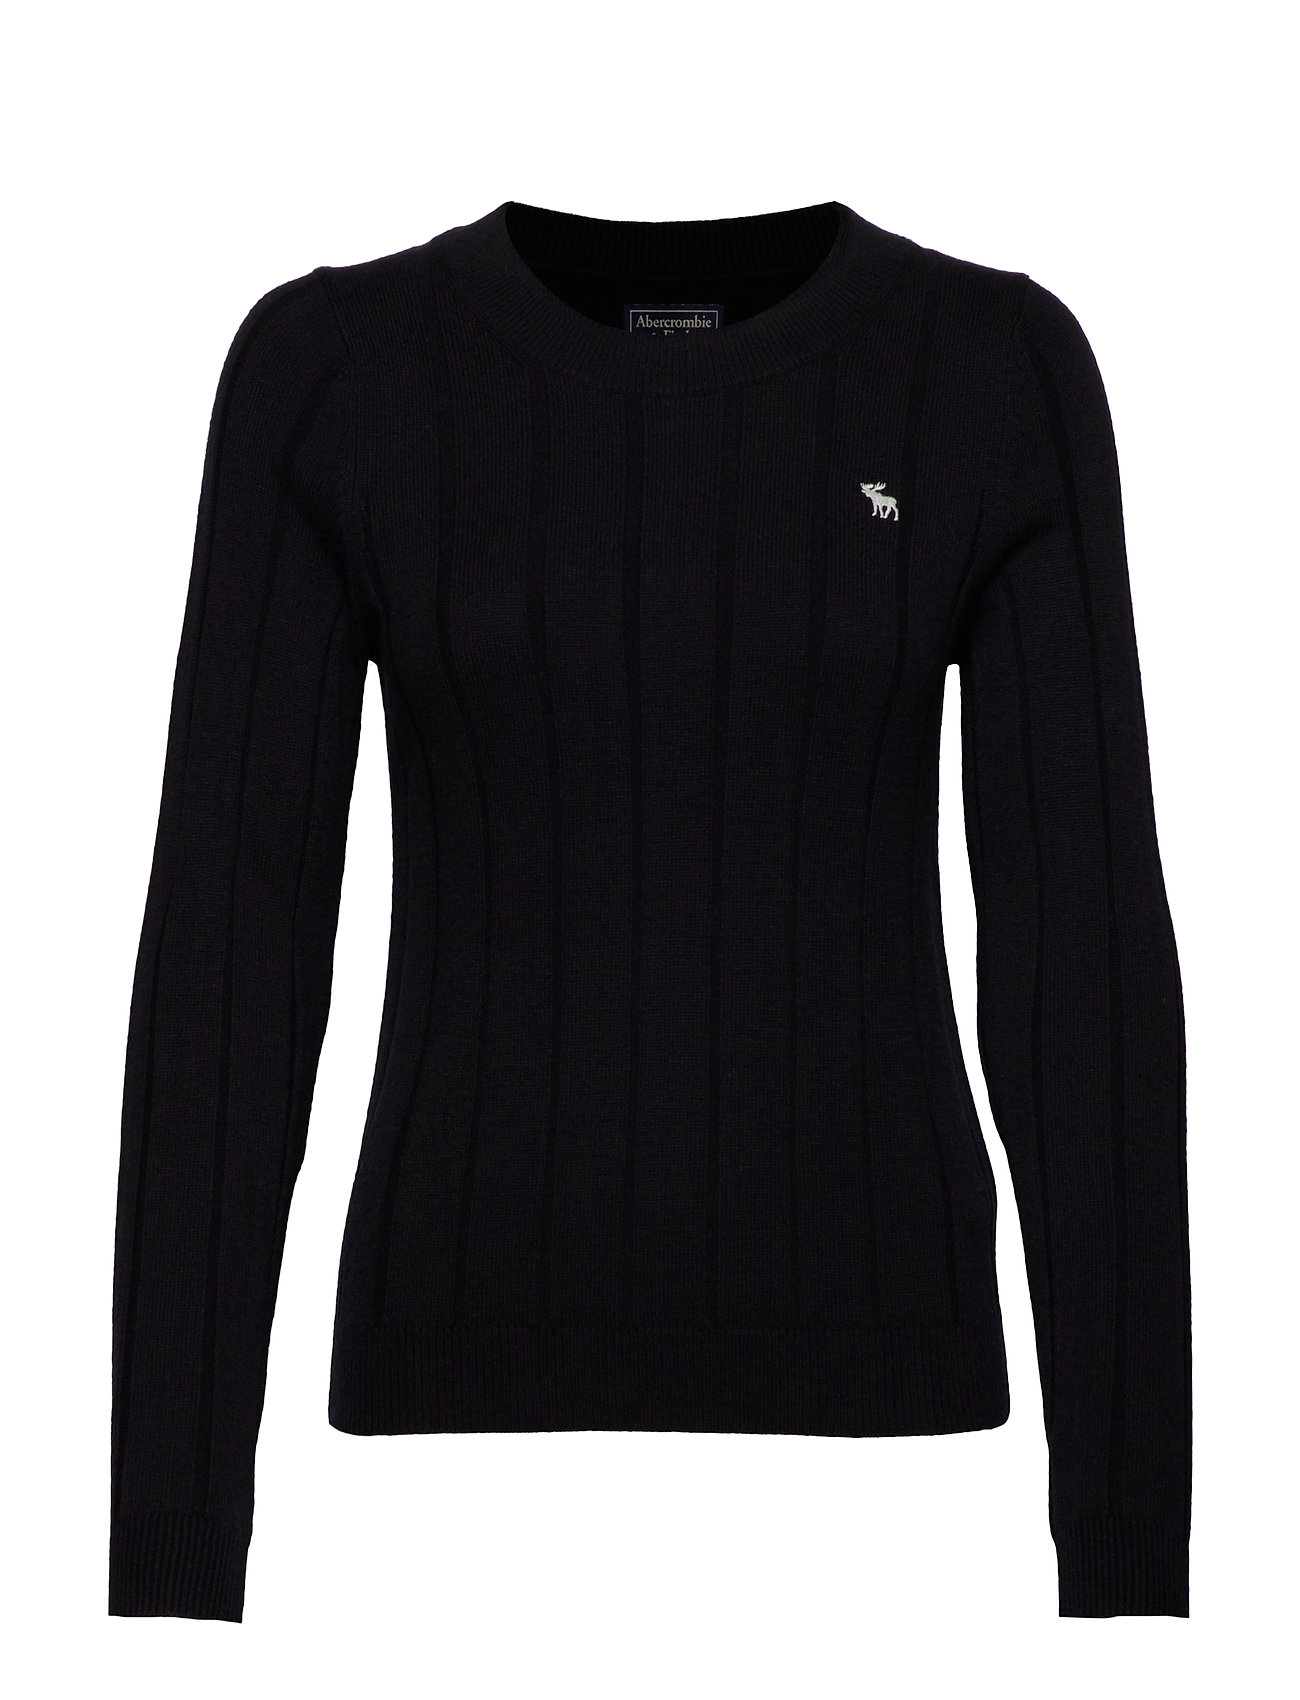 abercrombie black sweater